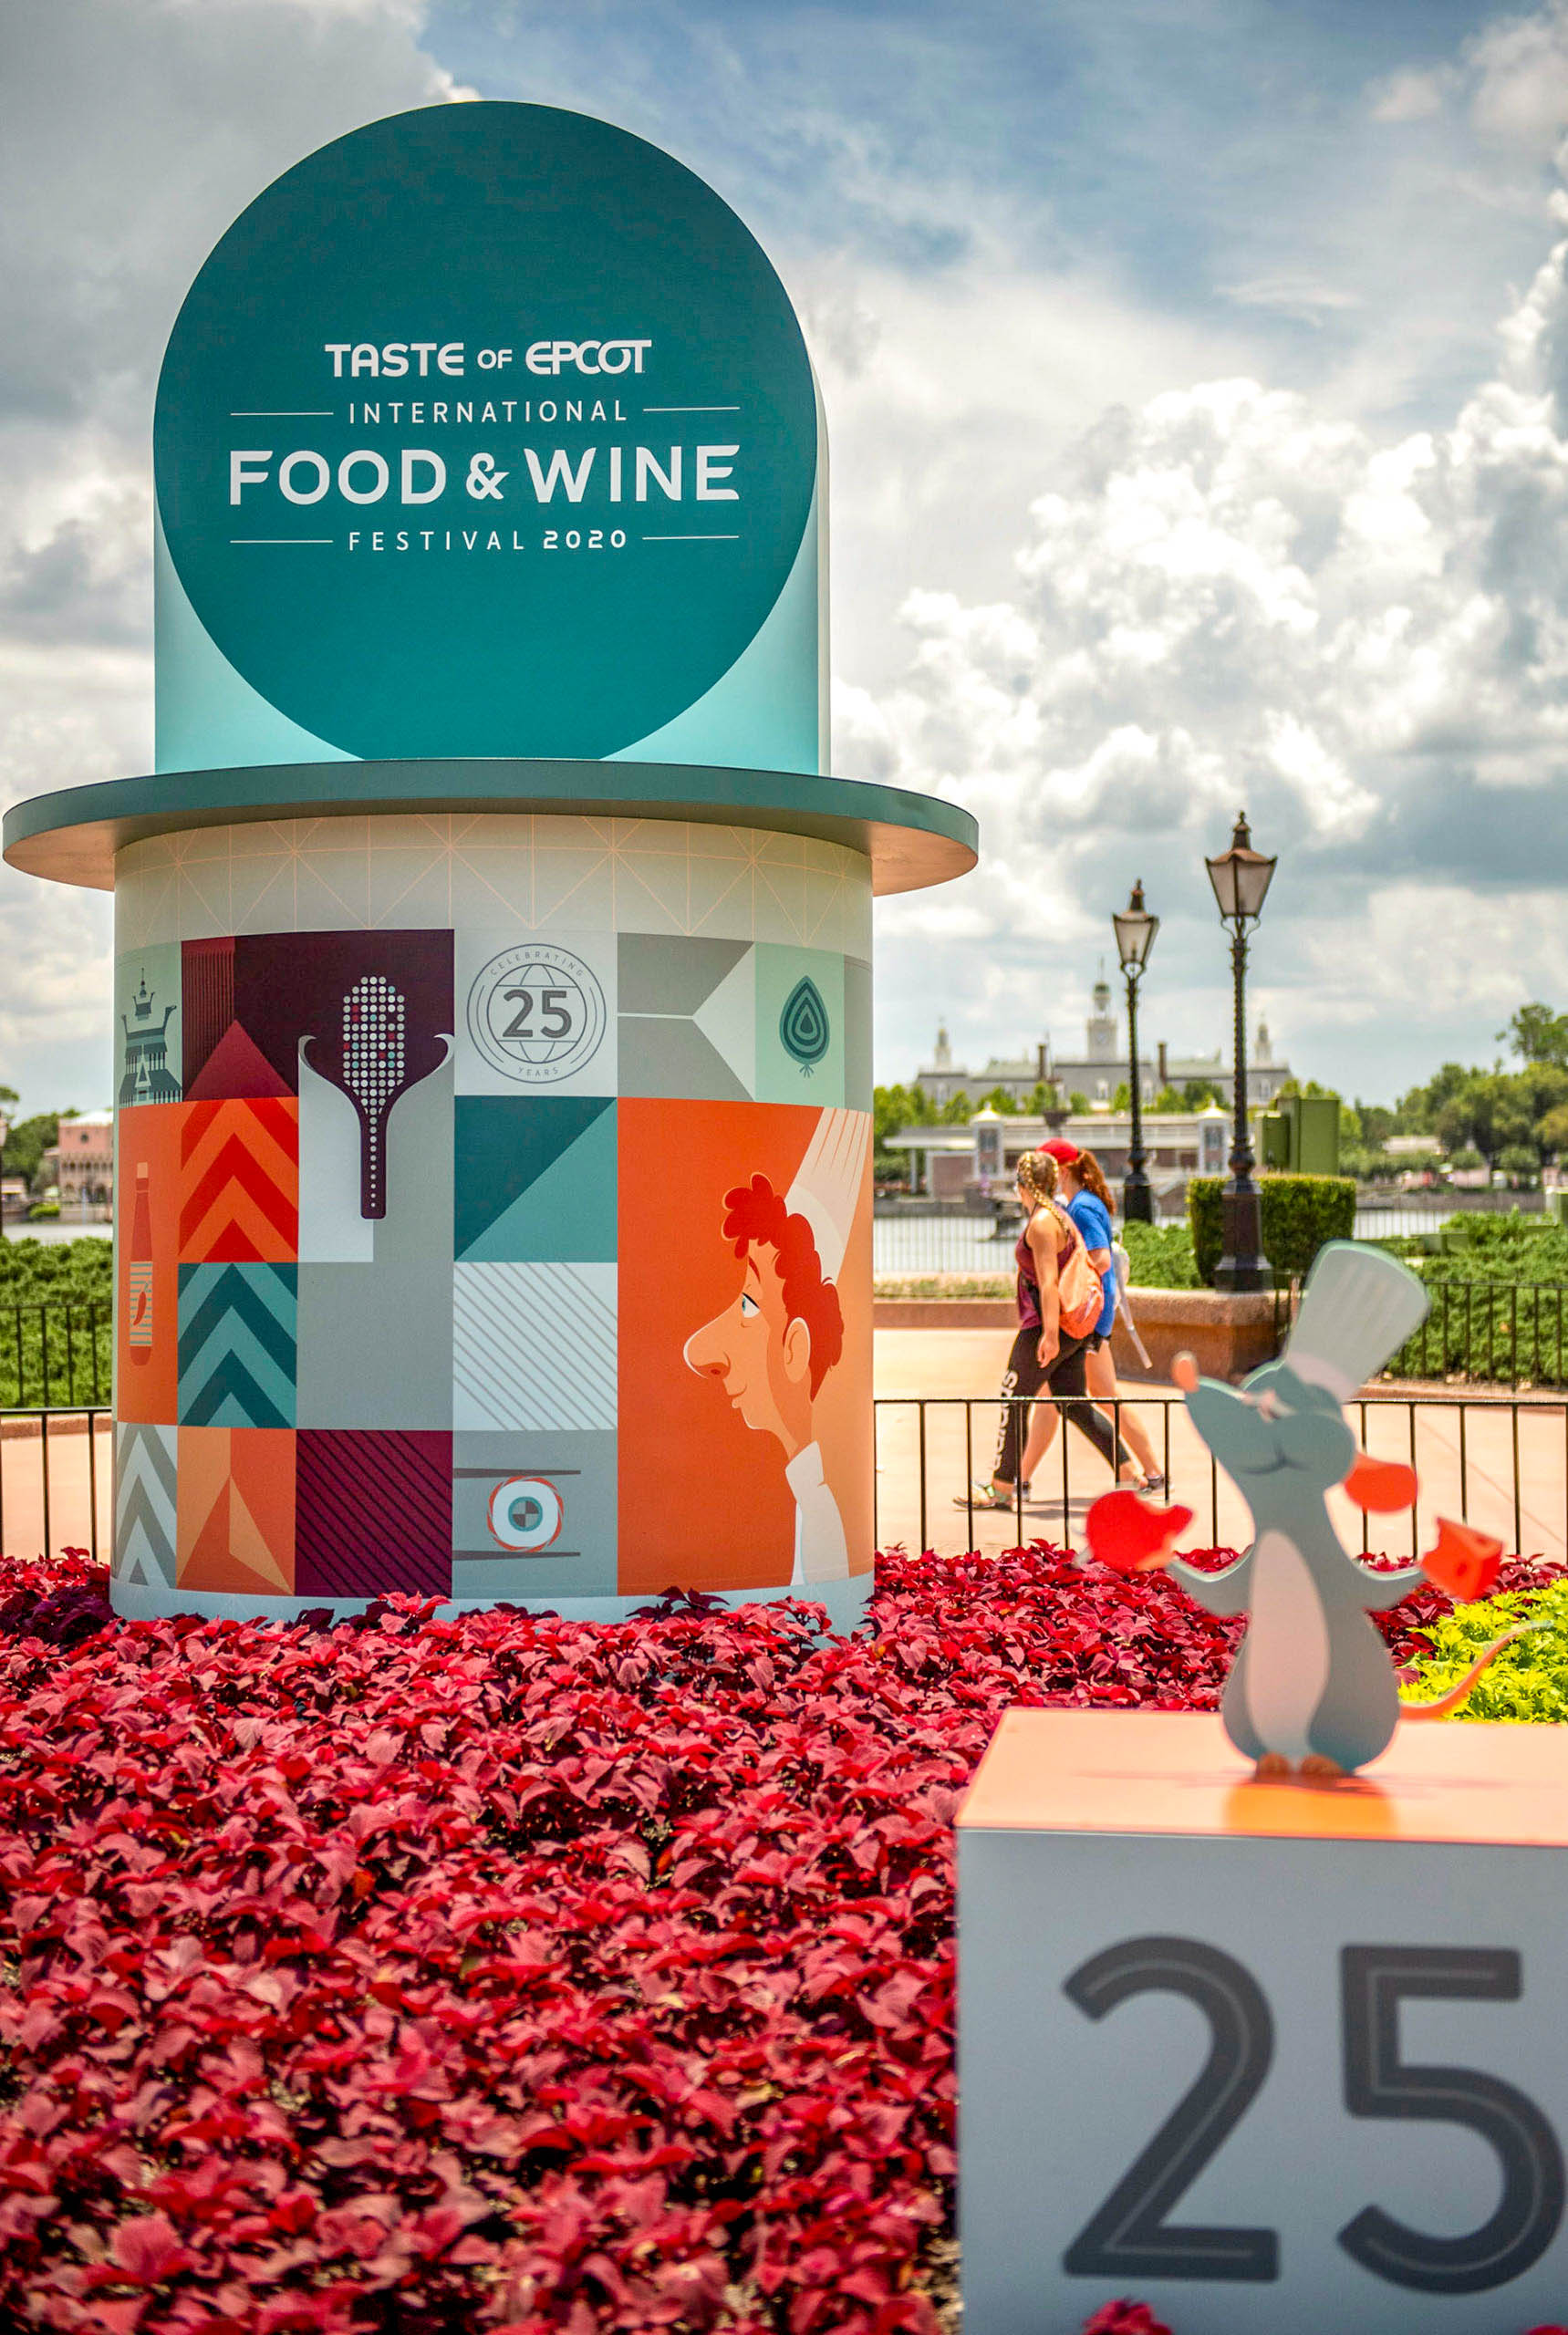 A Taste of Food & Wine Festival in 2020